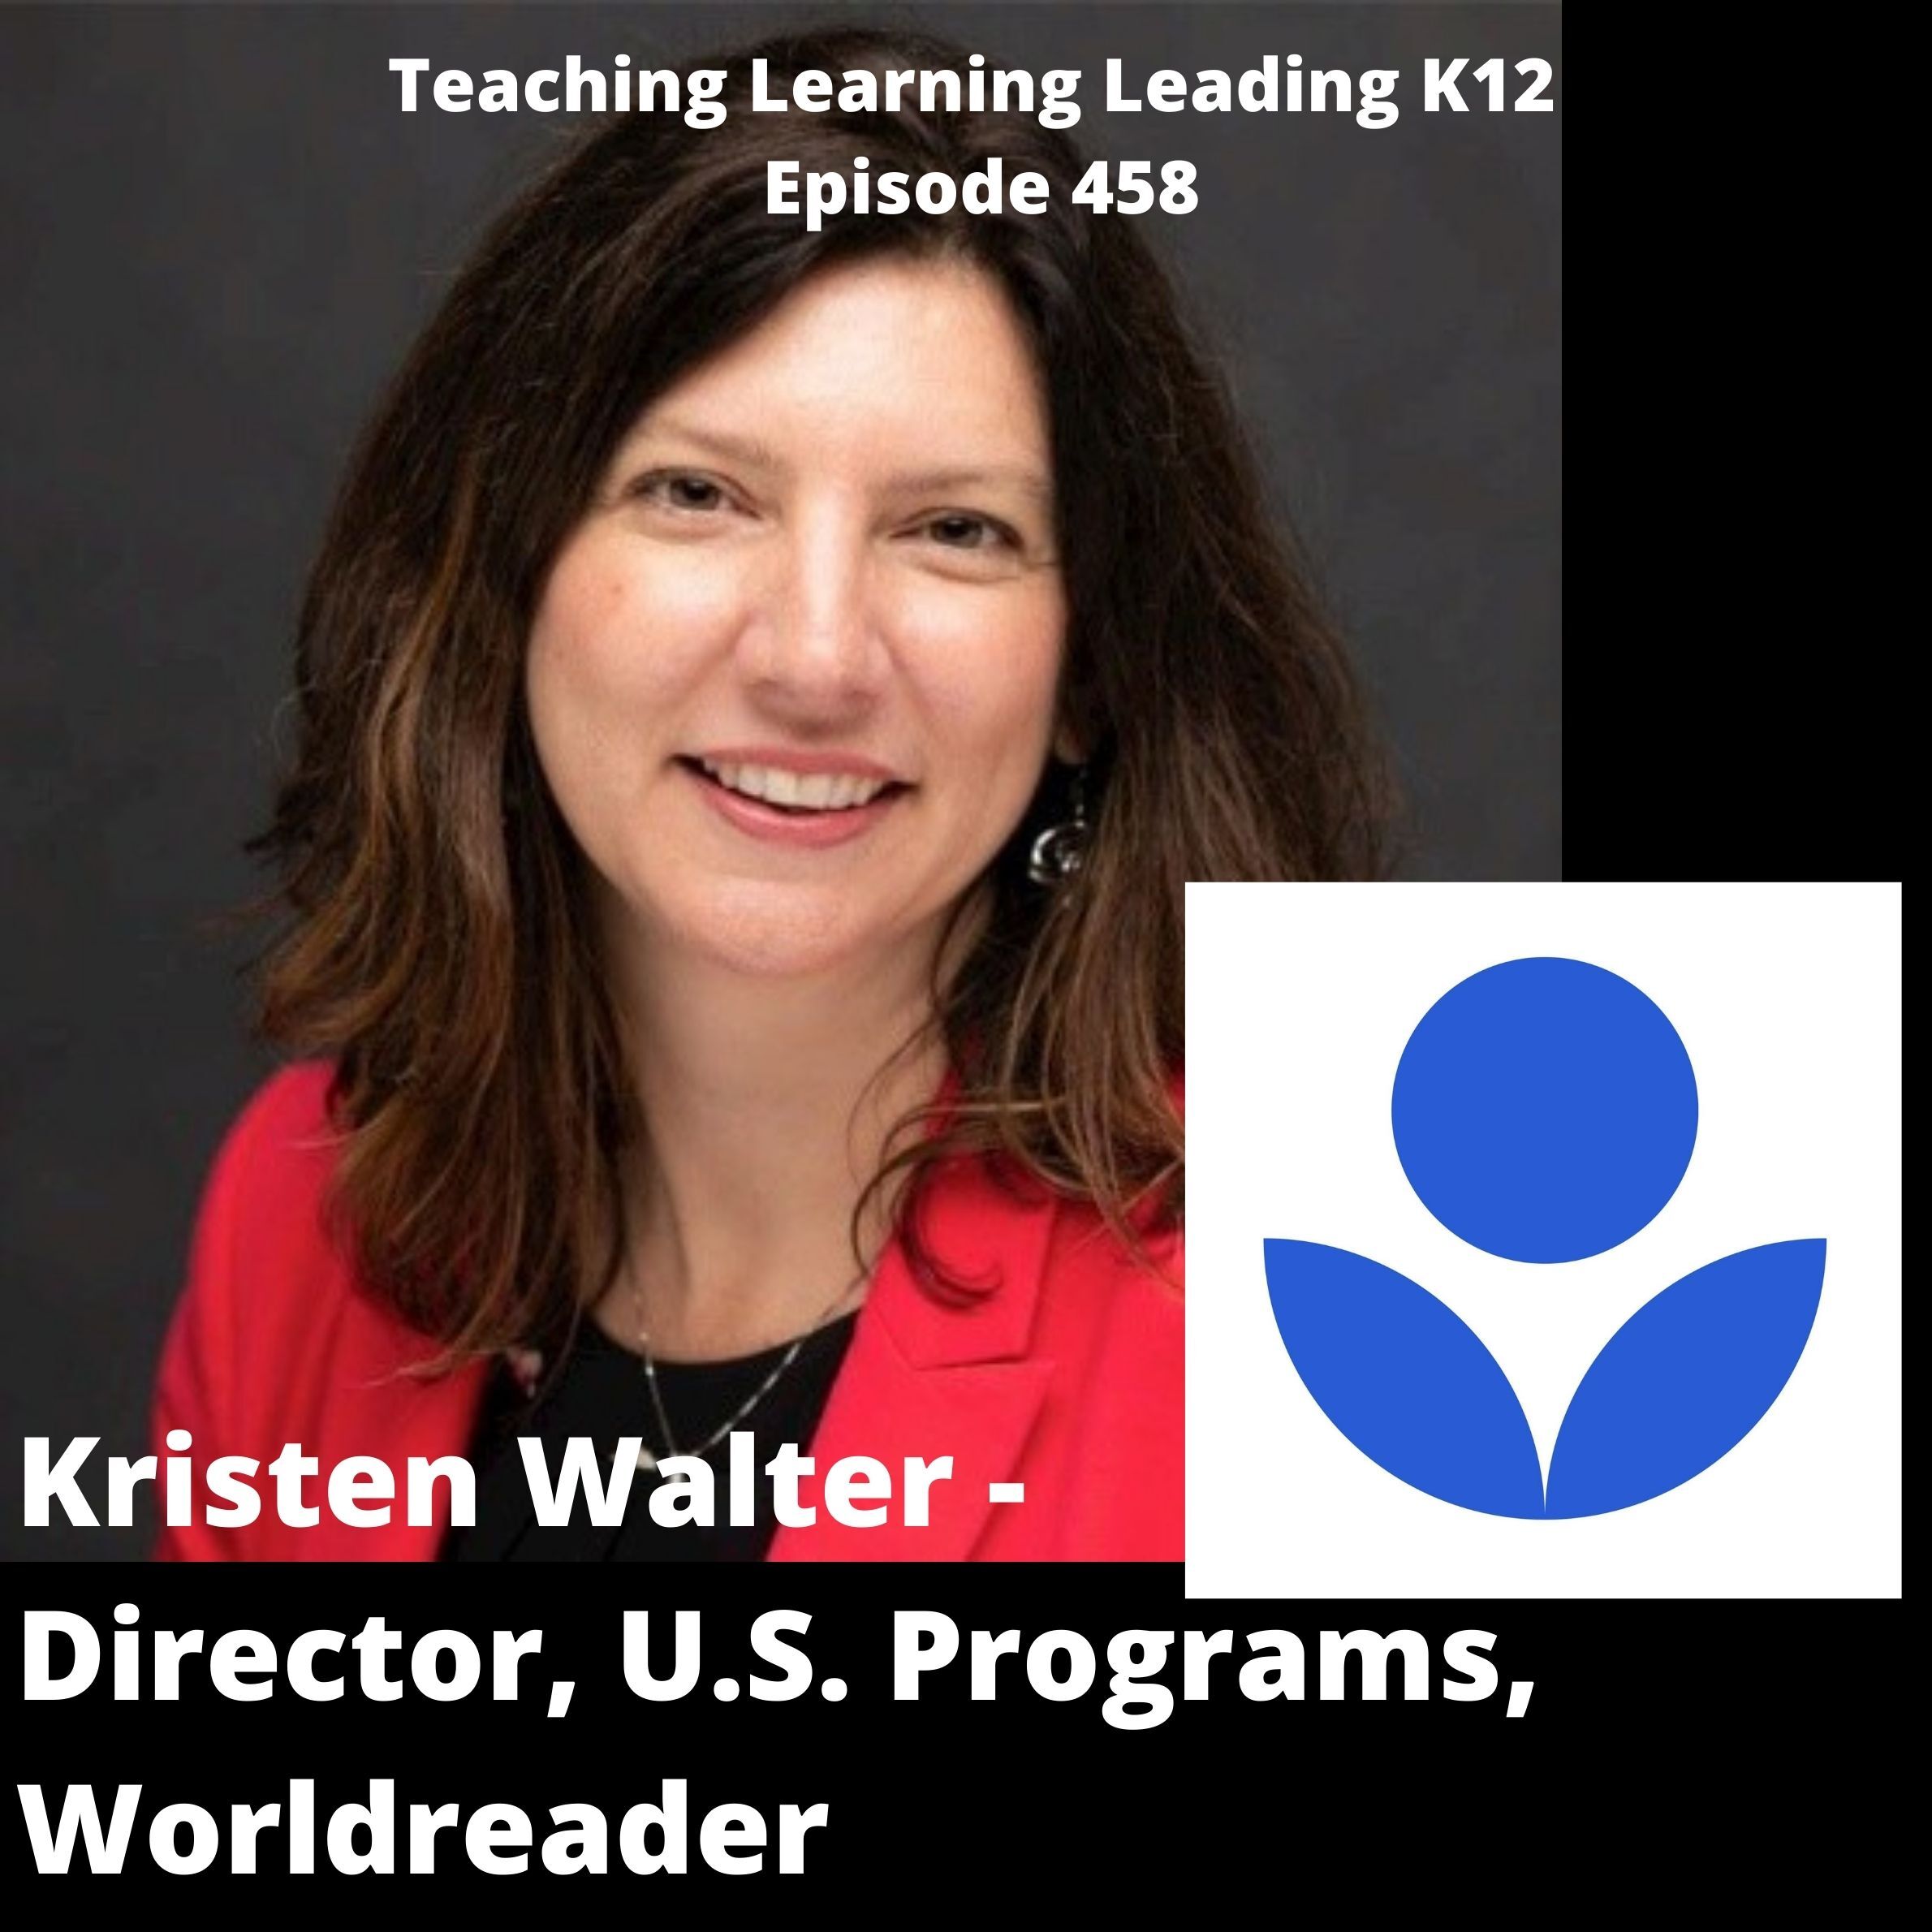 Kristen Walter, Director - U.S. Programs, Worldreader - 458 Image